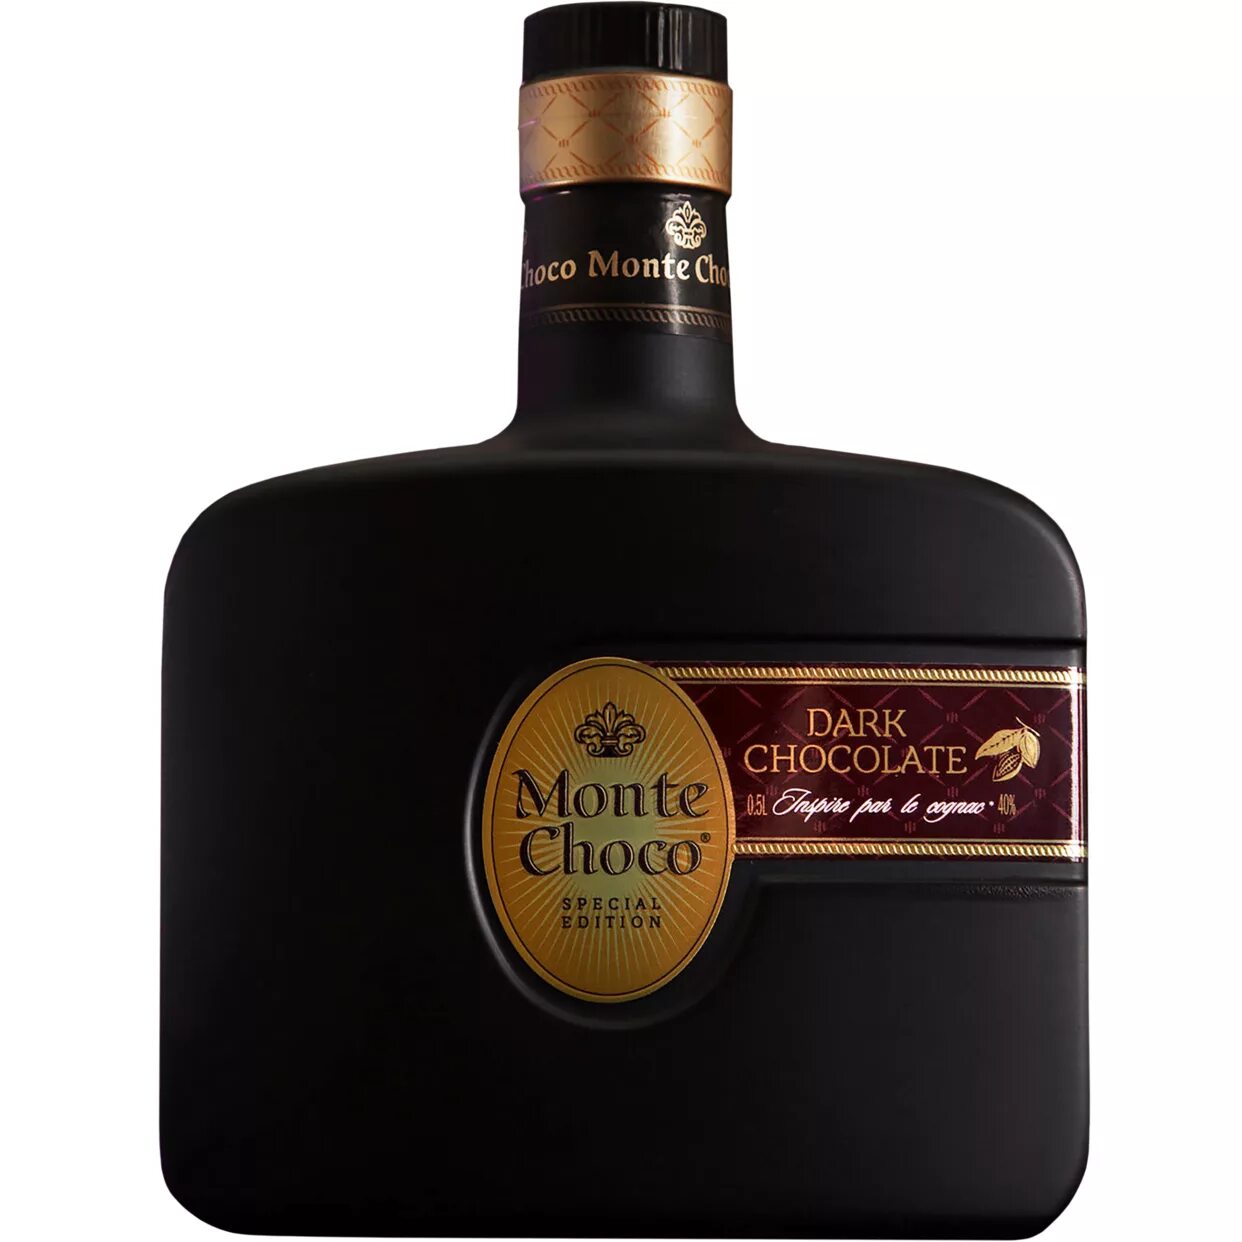 Коктейль choco. Монте Чоко дарк чоколате. "Monte Choco" Dark Chocolate, 0.5 л. Кокт.Monte.Choco Dark Chocolate 40% 0.5. Коньяк Monte Choco Dark Chocolate.